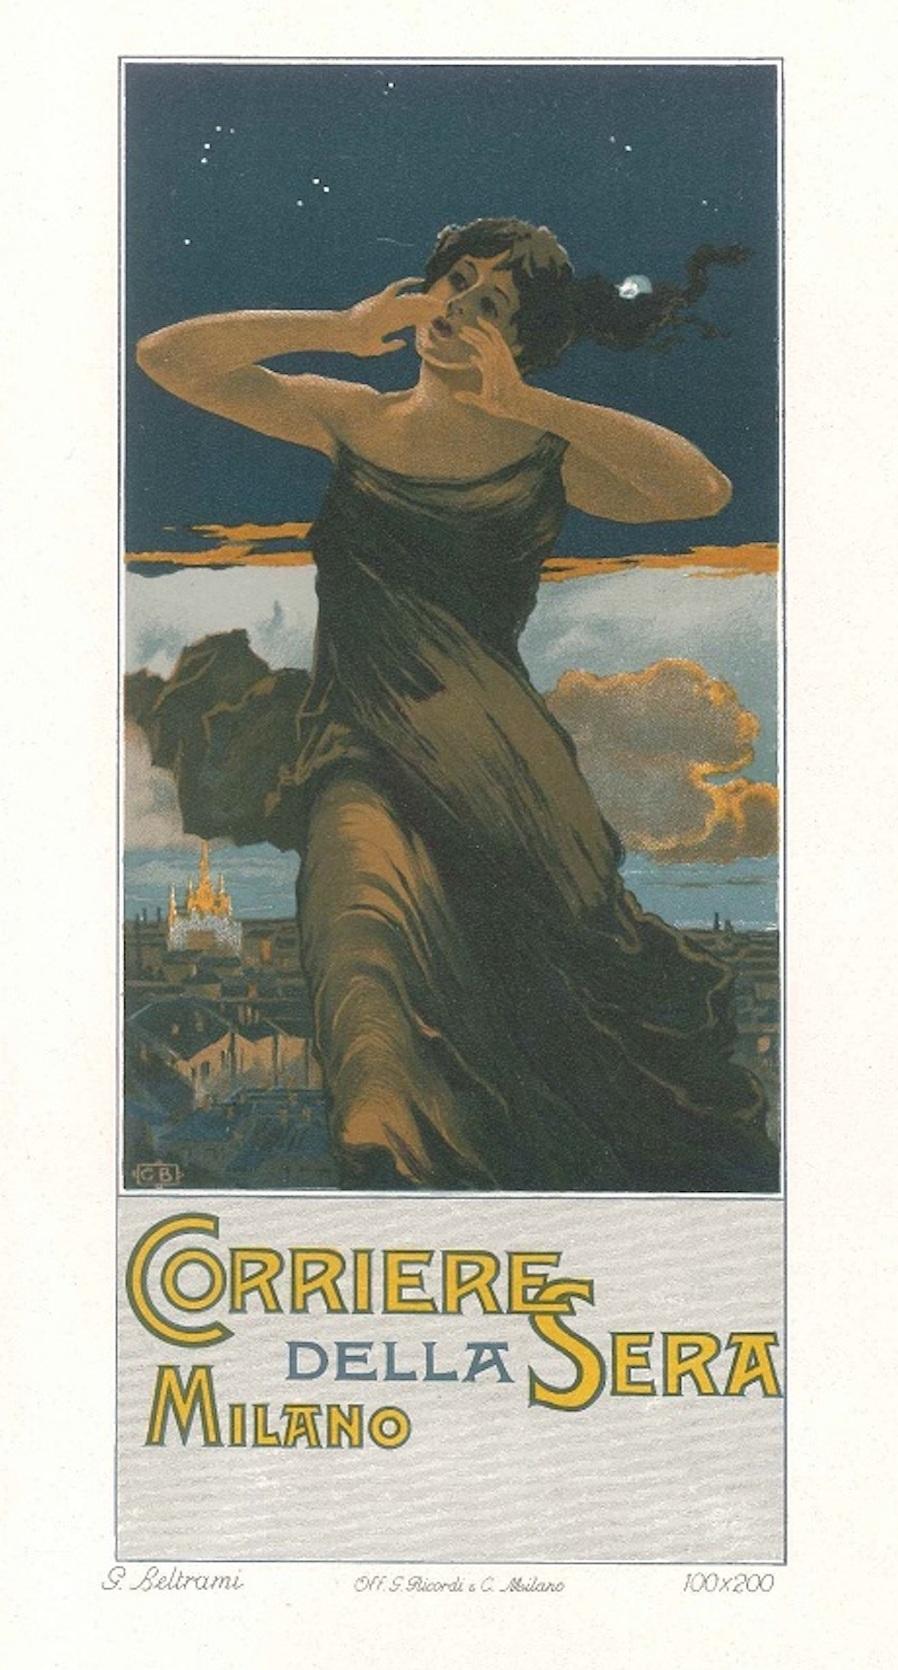 Corriere della Sera - Original Advertising Lithograph by G. Beltrami - 1910